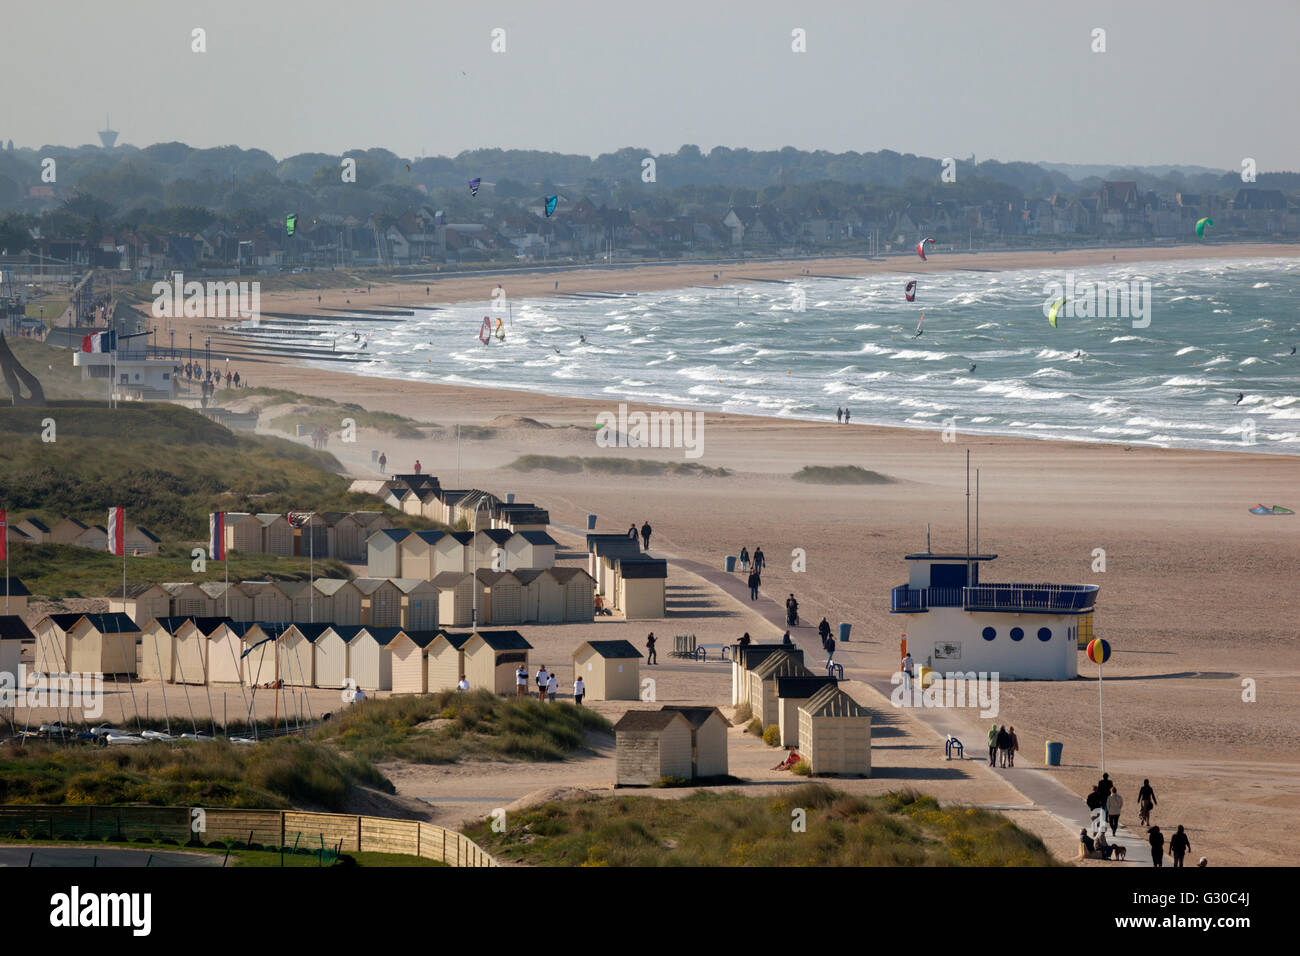 View over Plage de Riva Bella beach, Ouistreham, Normandy, France, Europe Stock Photo